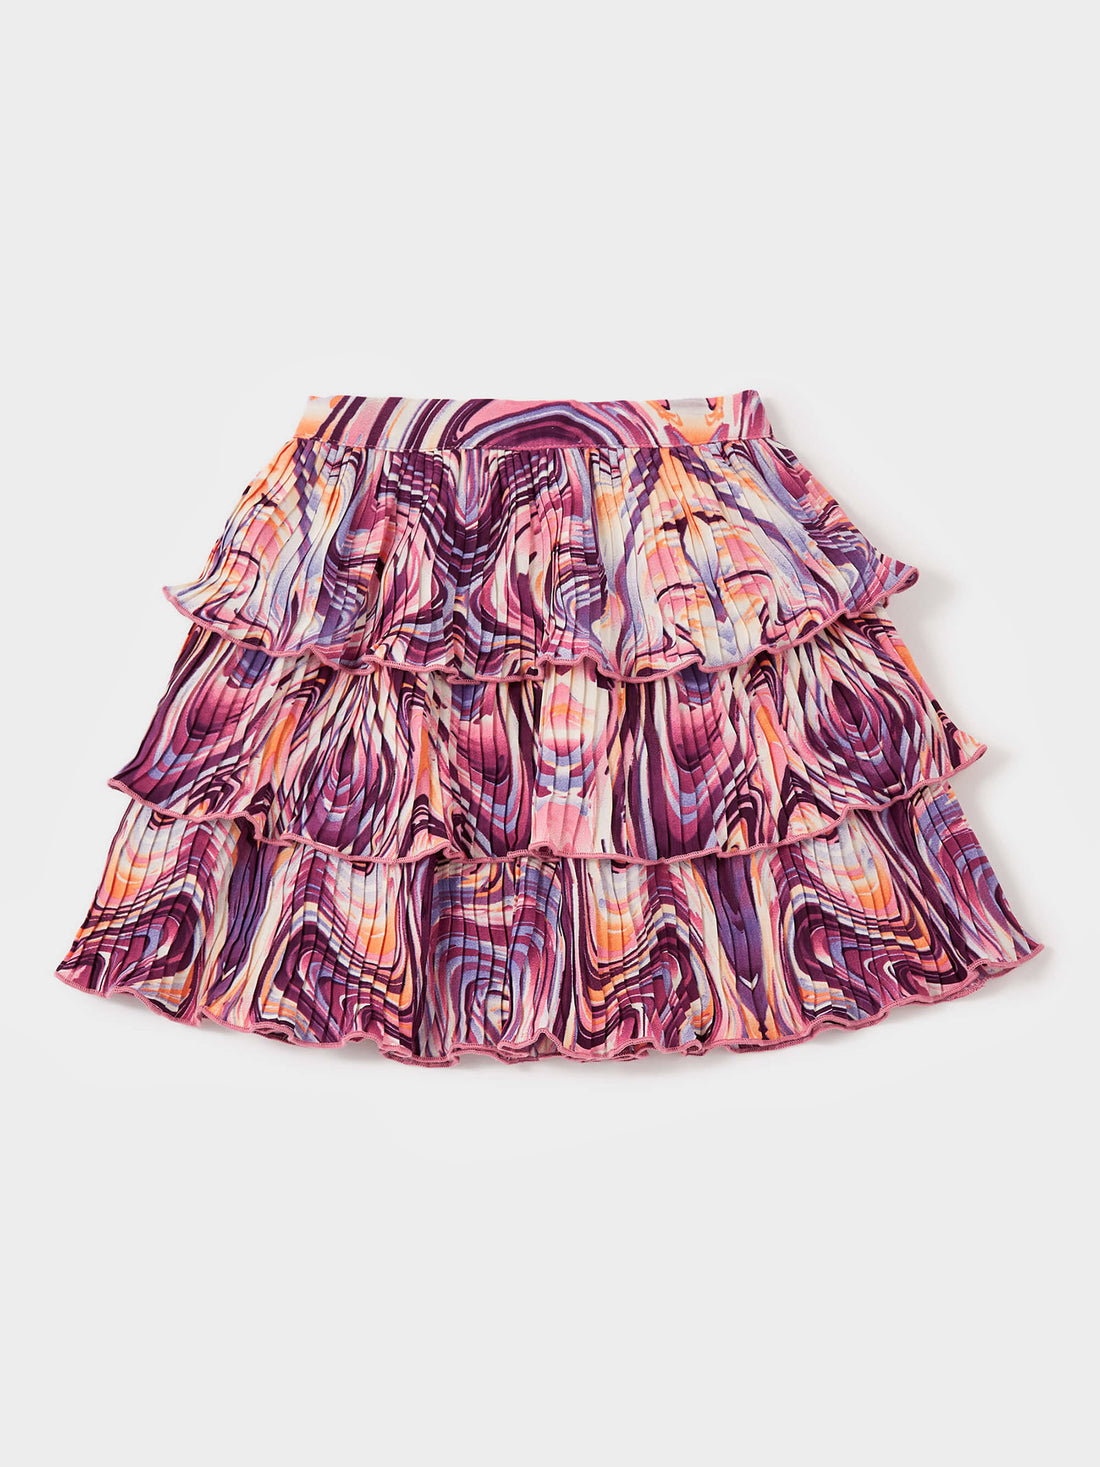 Marble Printed Skirt | GWD Fashion